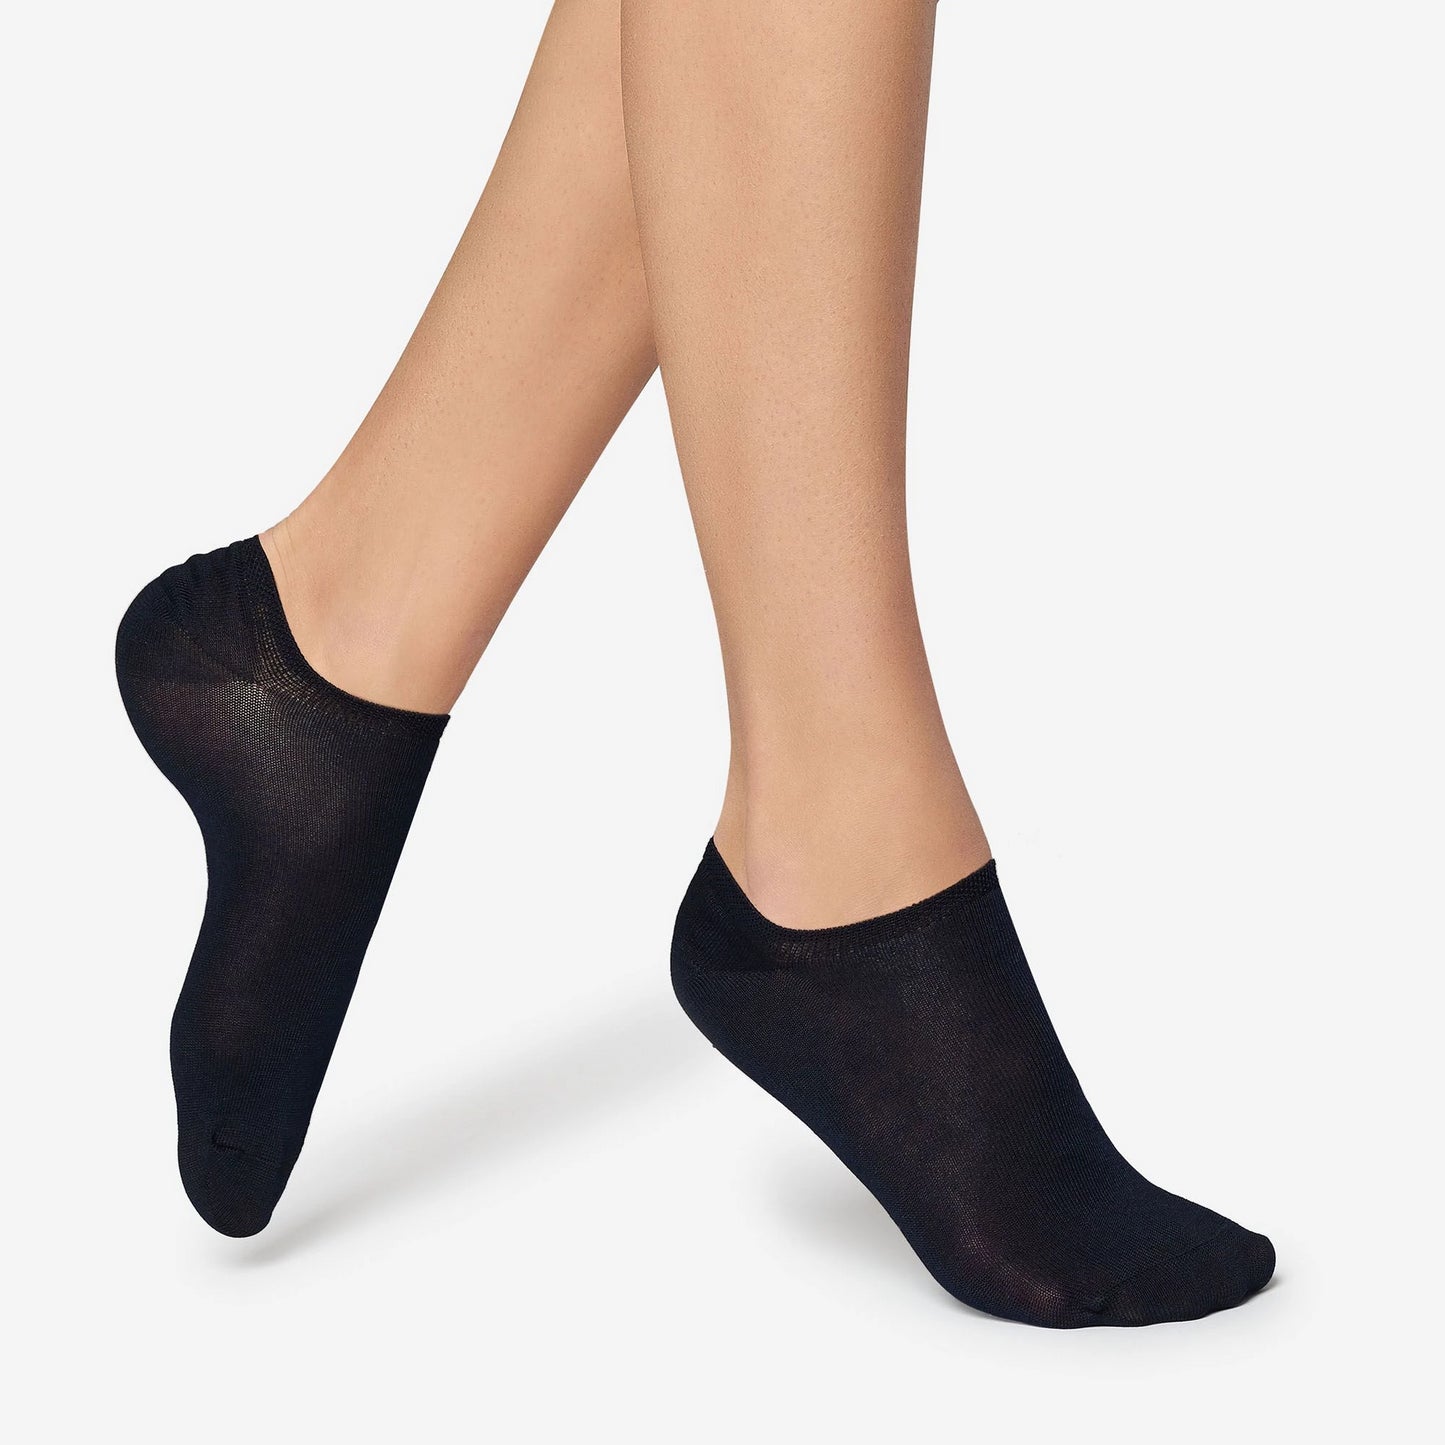 Omsa Minicalzino Liscio - black light low cotton ankle socks